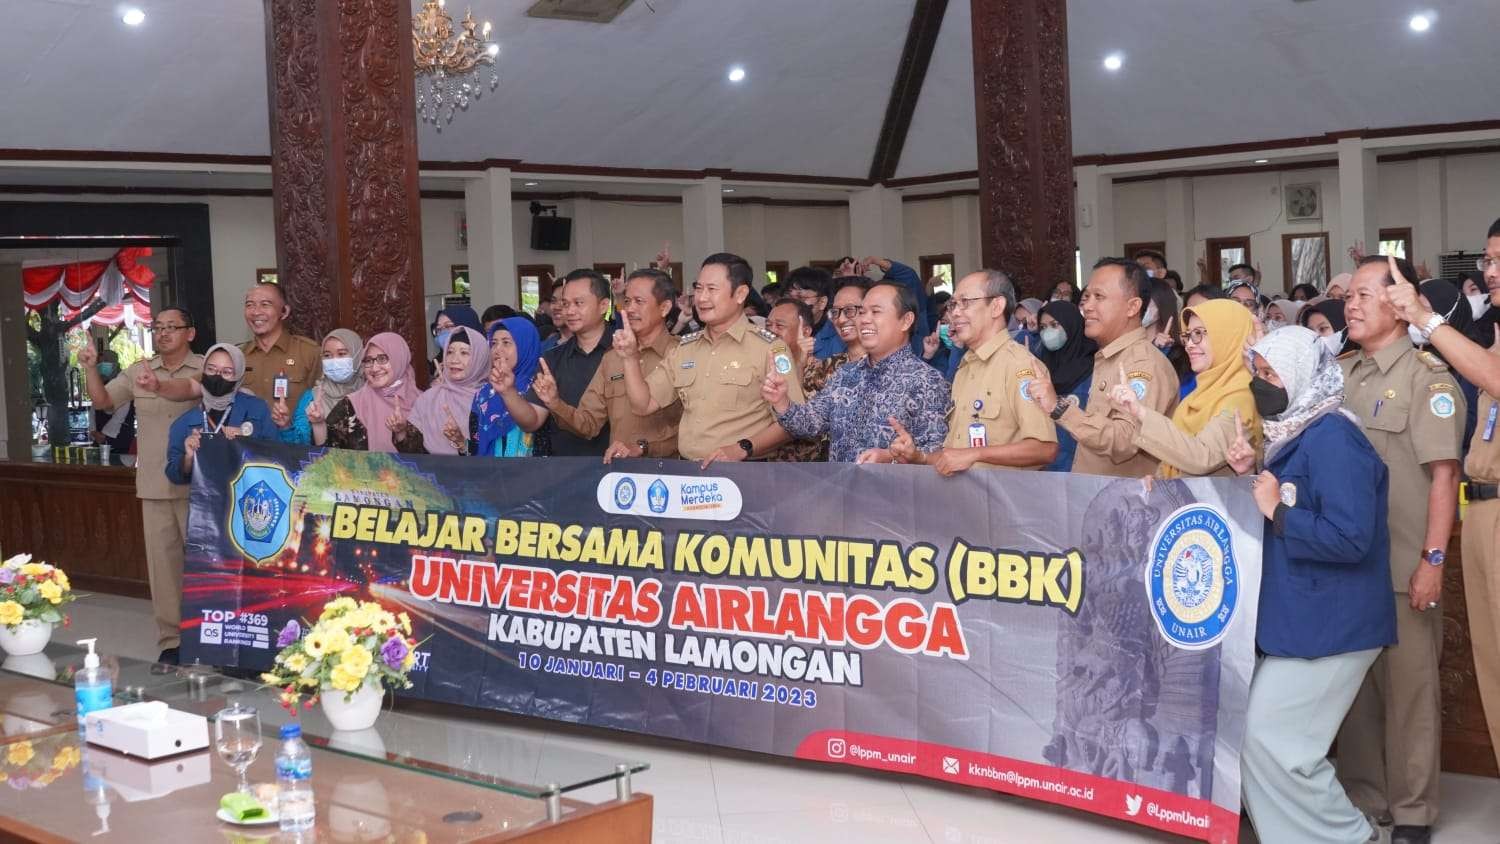 Buoati Lamongan menerima 236 mahasiswa KKN-BBK Unair Surabaya. (Foto: Dokumentasi Kominfo Lamongan)